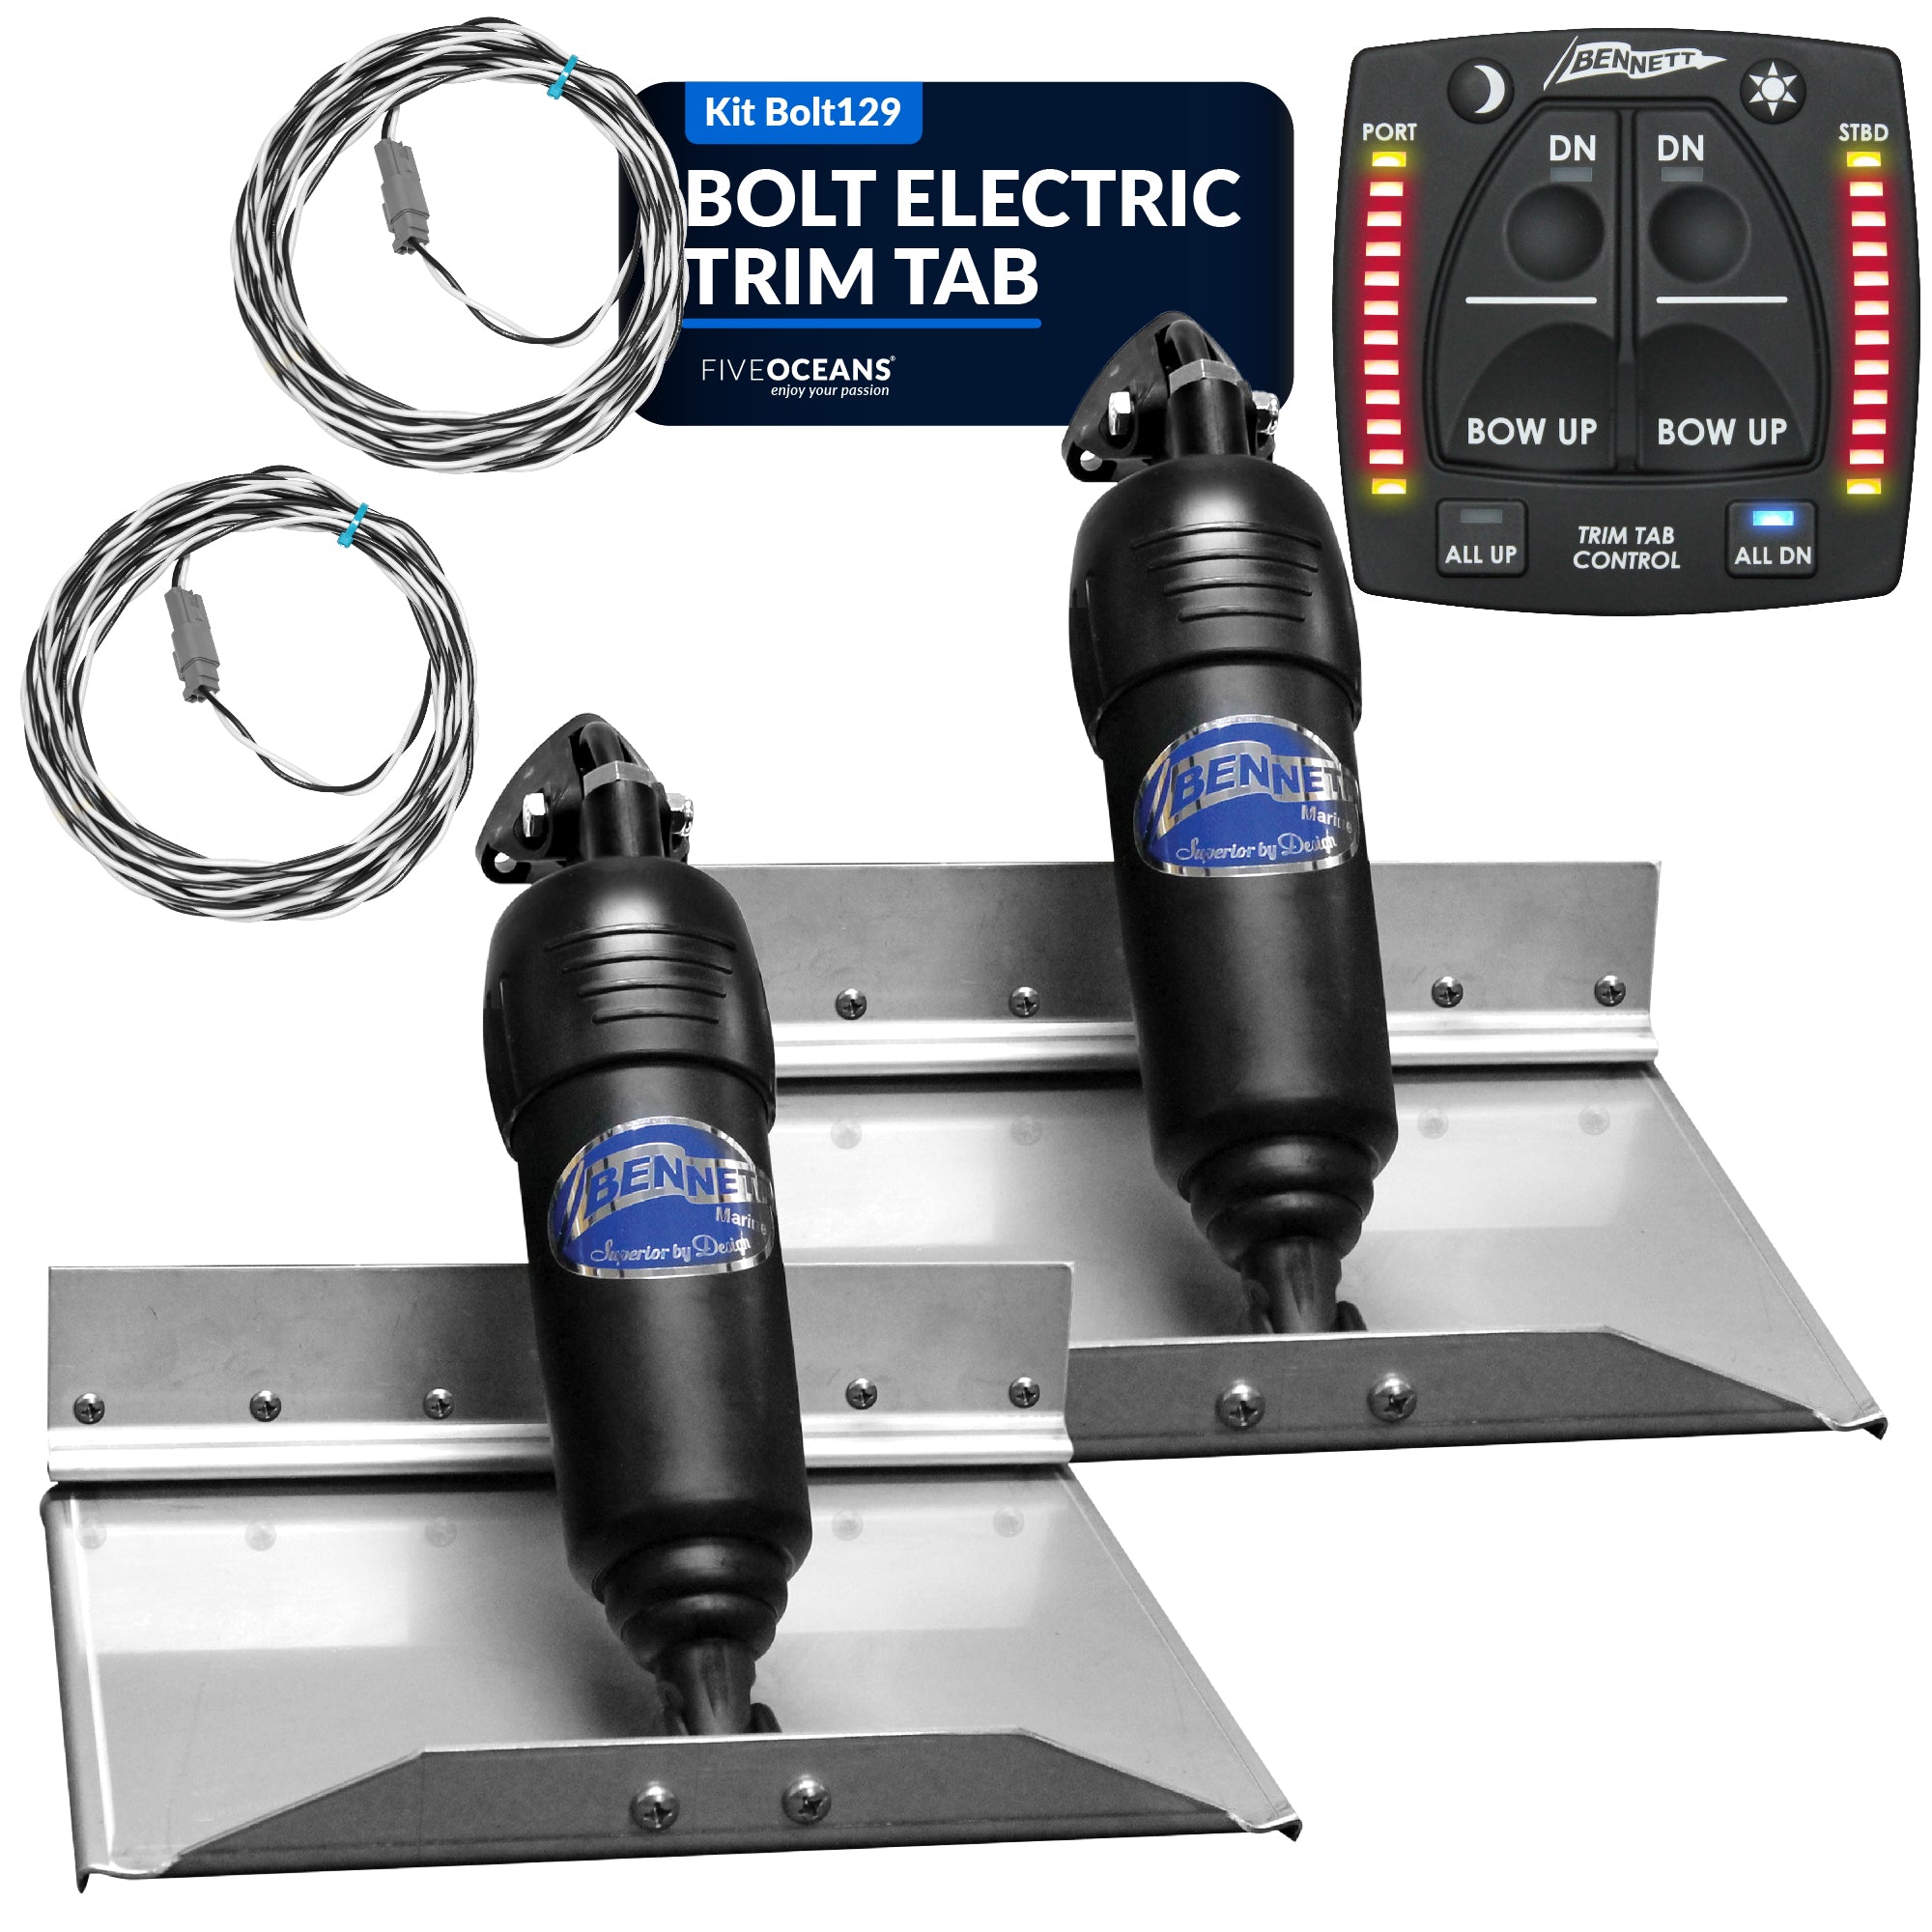 Bolt Electric Trim Tab System 12" x 9", Complete Kit BOLT129, 12V DC - FO4322